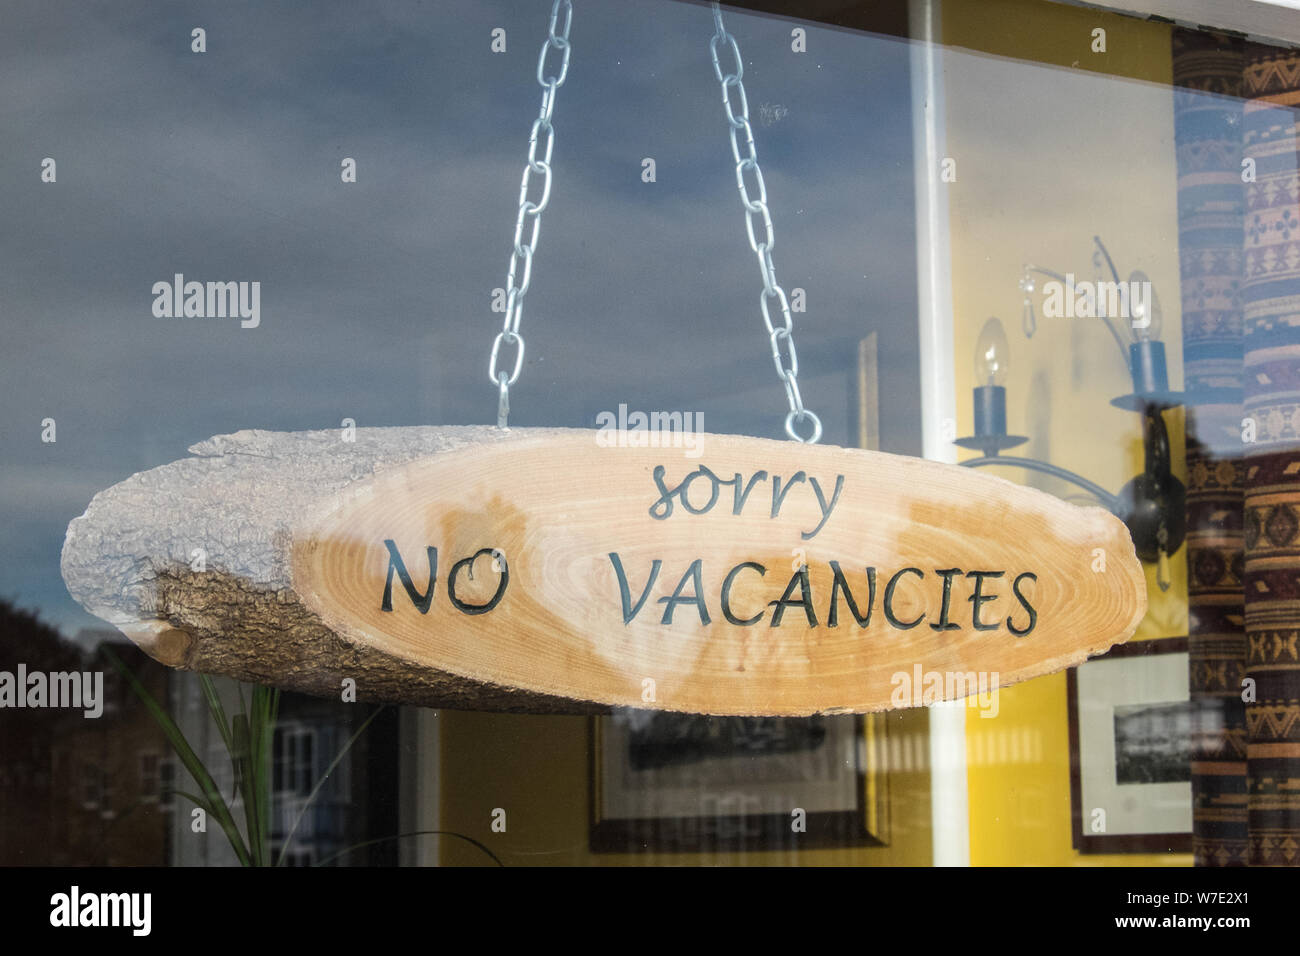 No vacancy,sign,Ambleside,The Lakes,Lake District,The Lake District National Park,National Park,Cumbria,England,English,Britain,British,GB,UK, Stock Photo